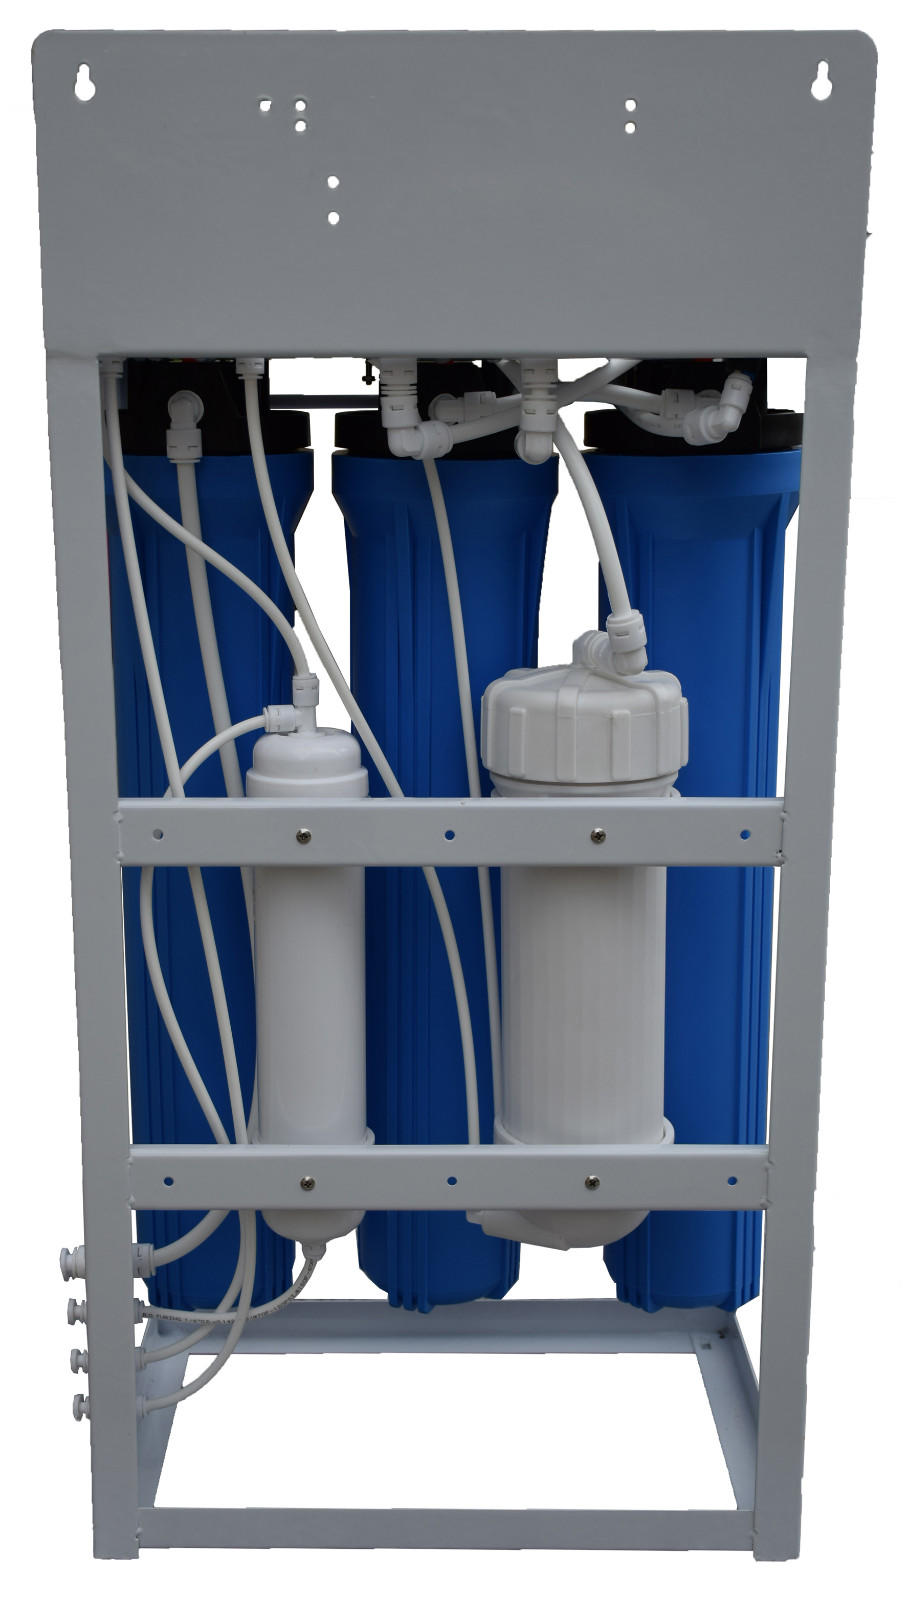 Ocpuritech carbon hot water filter cartridge suppliers for medicine